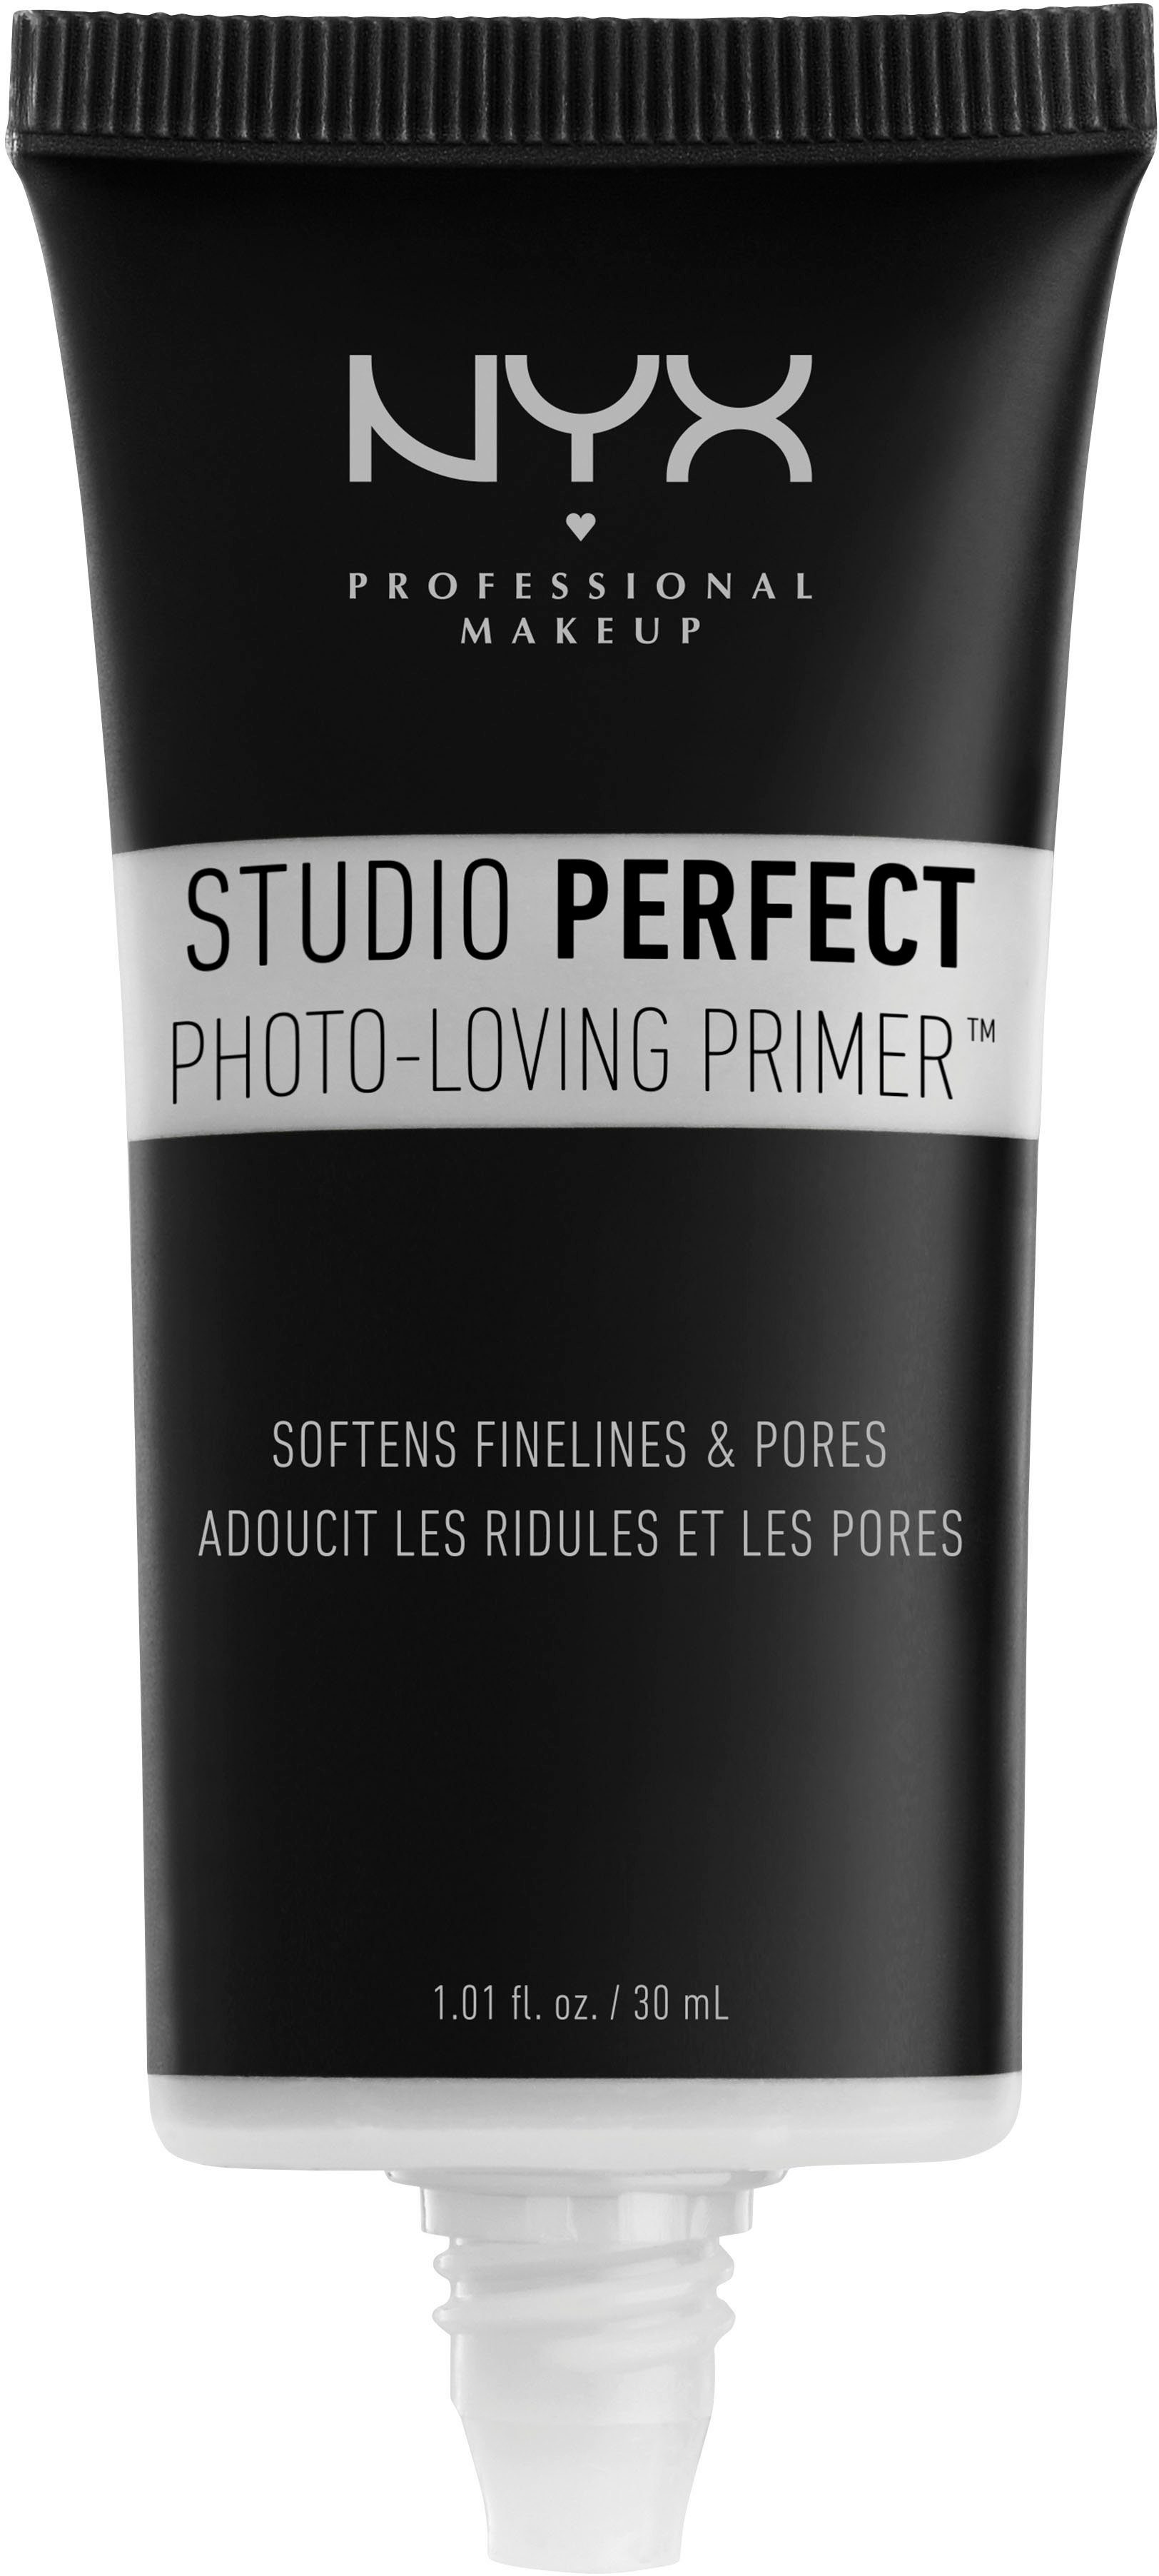 Primer NYX Professional Primer NYX Makeup Studio Perfect